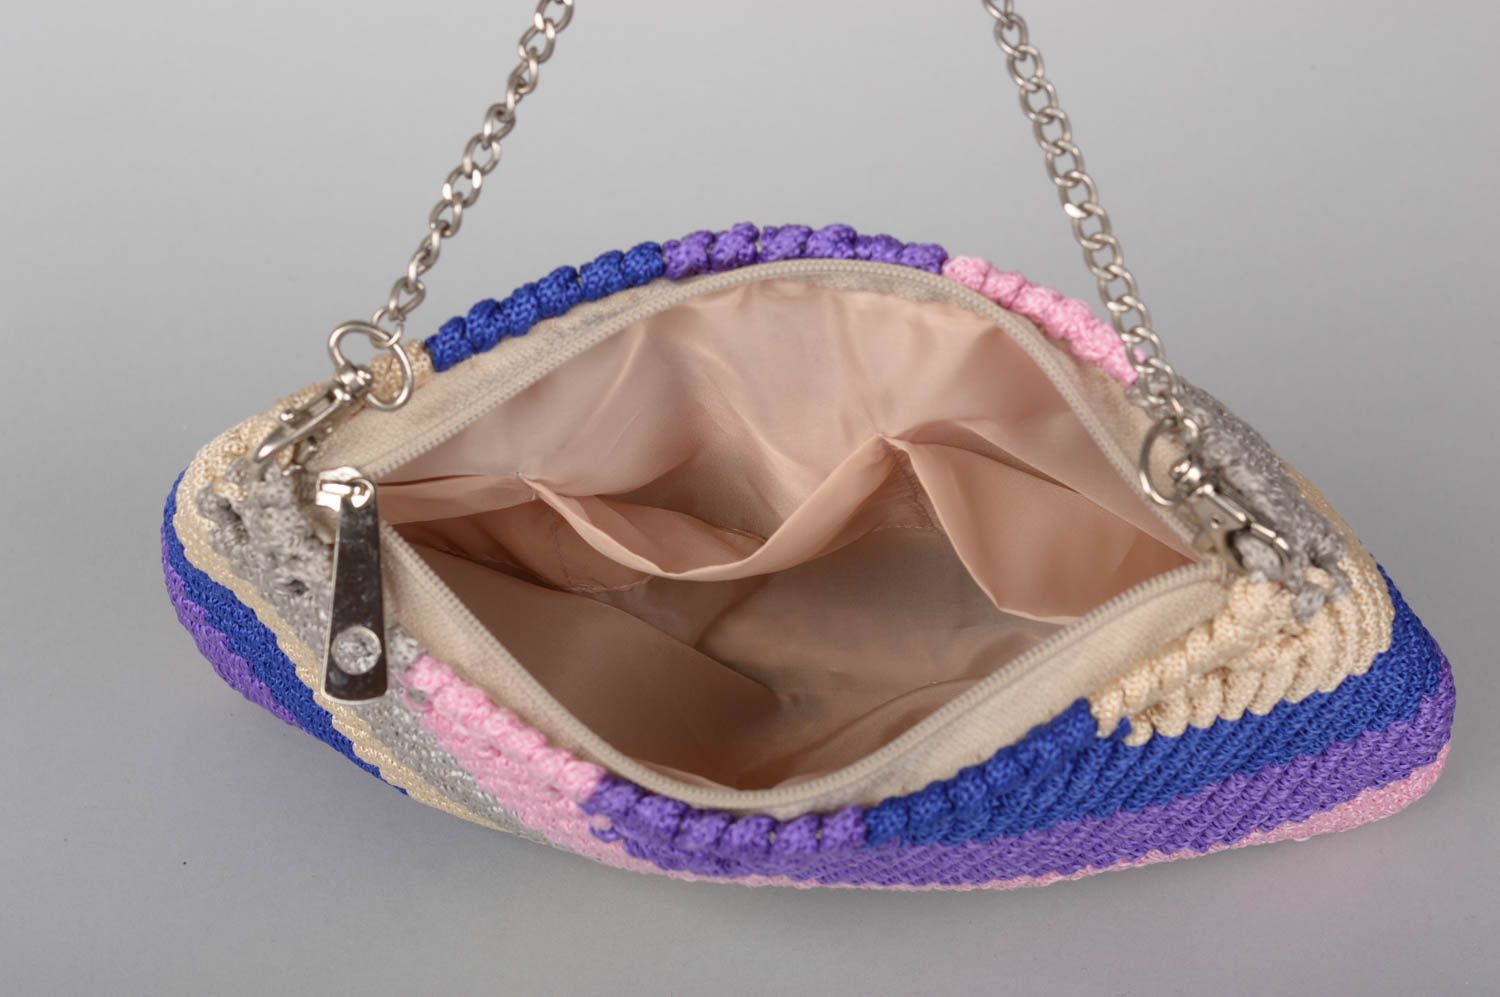 Handmade bag designer accessories macrame bag women purse gift ideas for wife photo 3